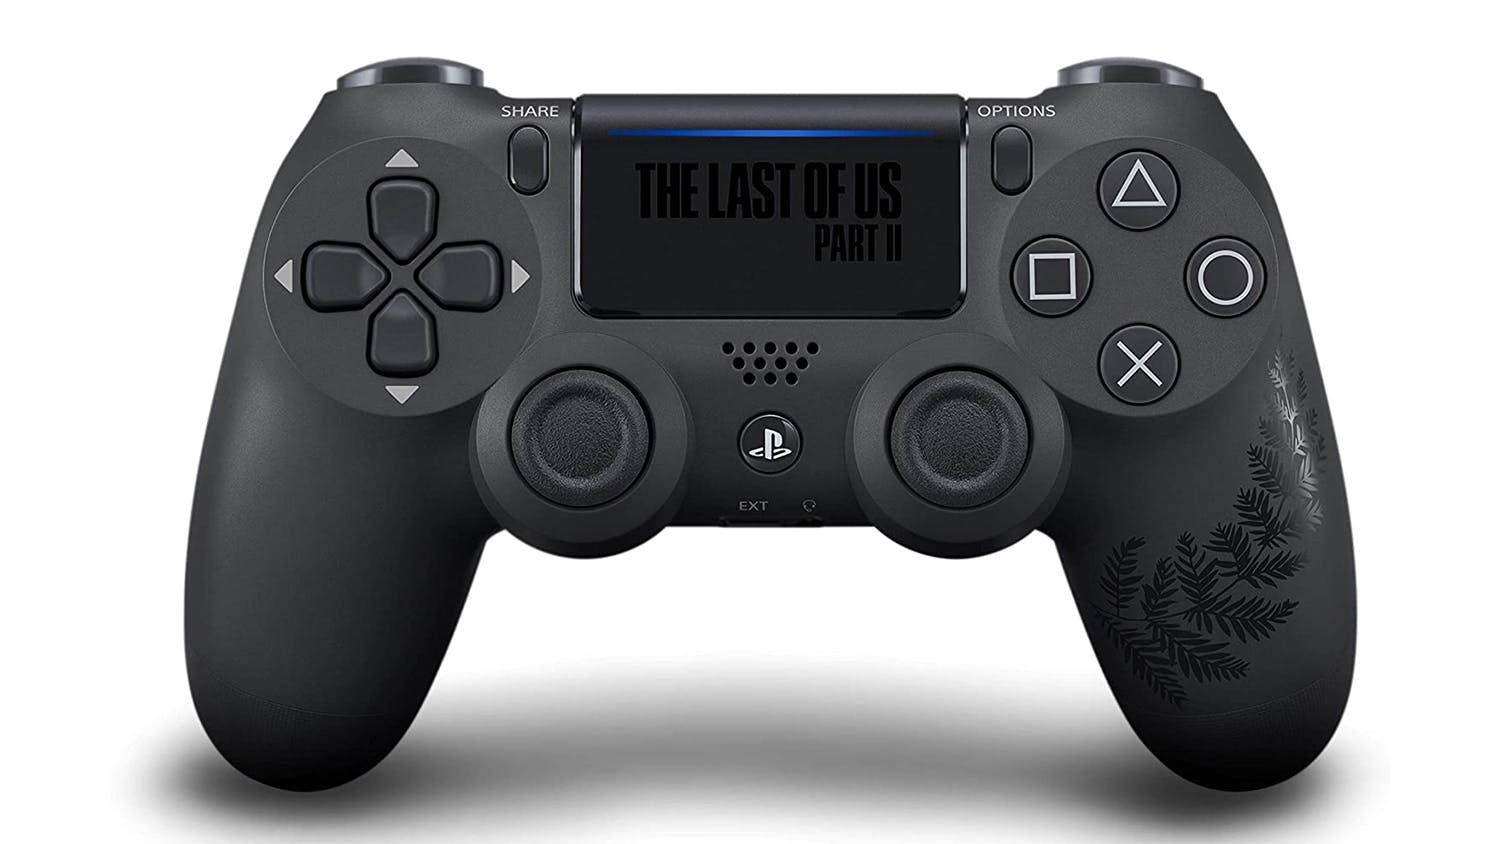 Last of Us II DualShock 4